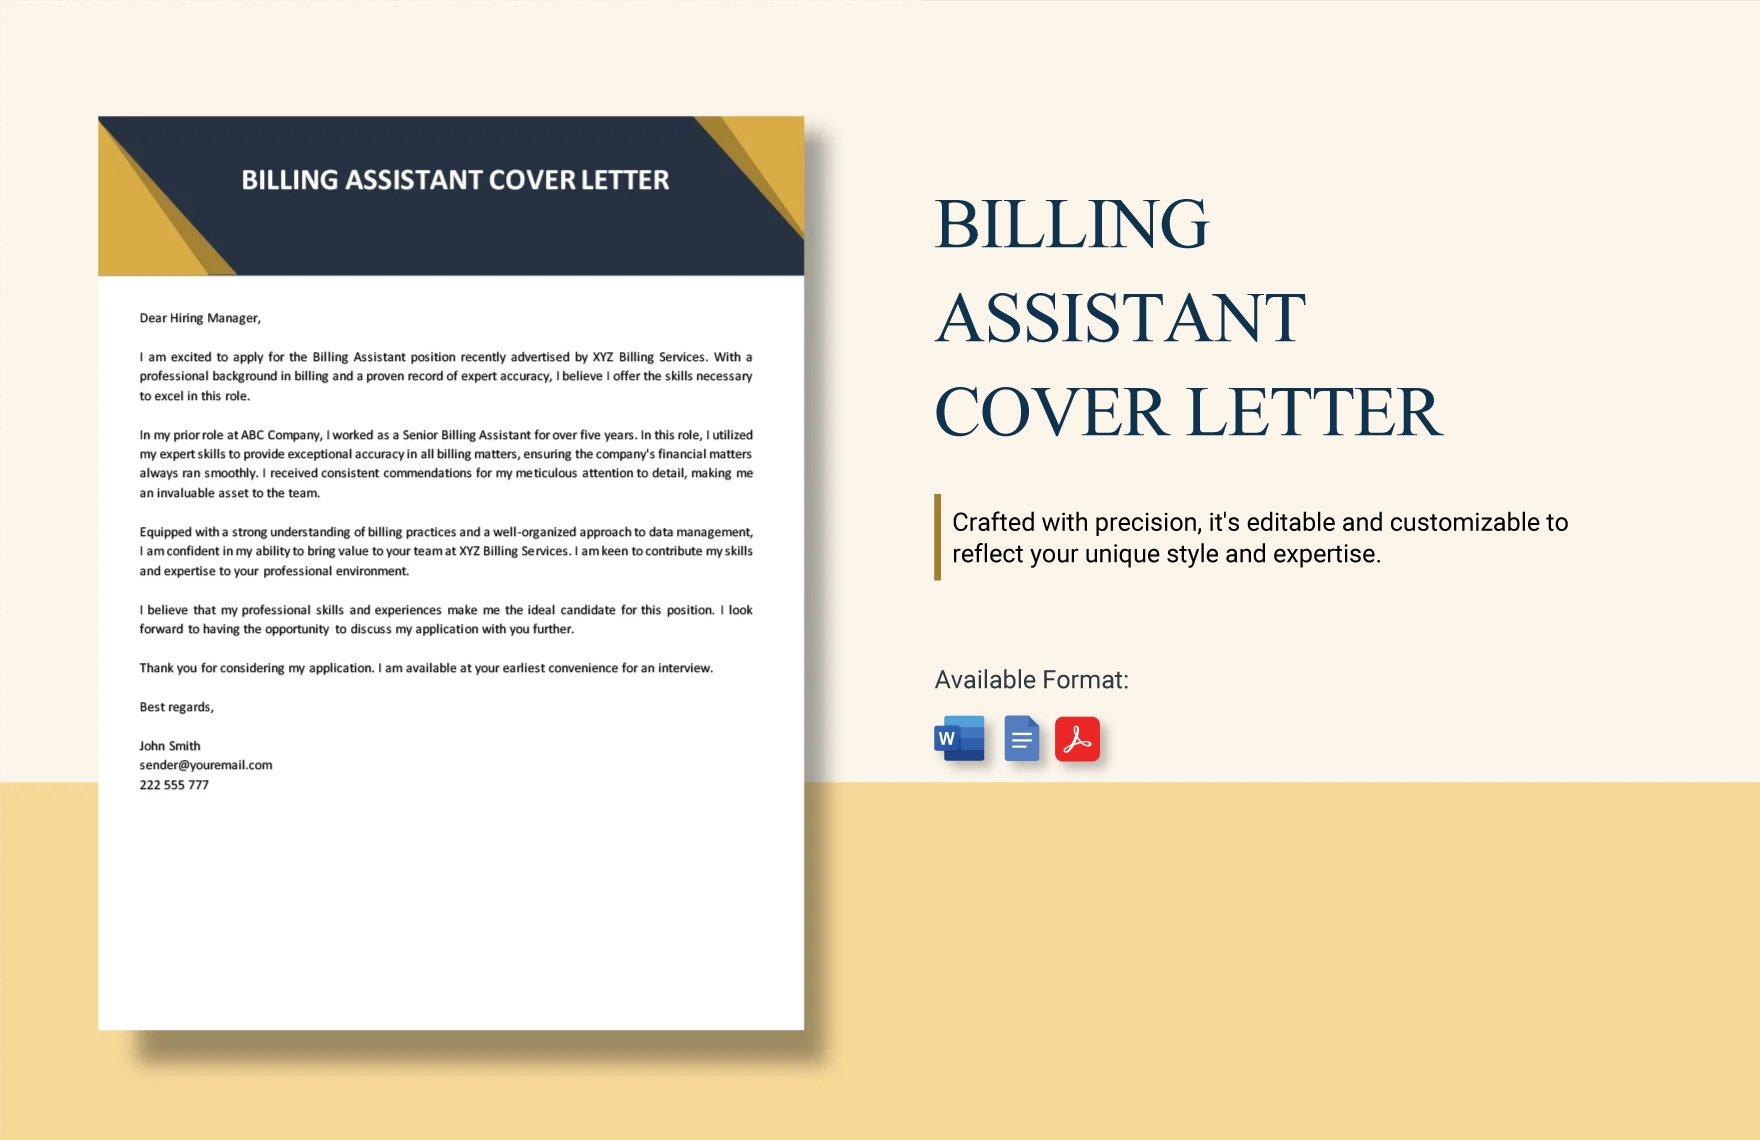 Billing Assistant Cover Letter in Word, Google Docs, PDF